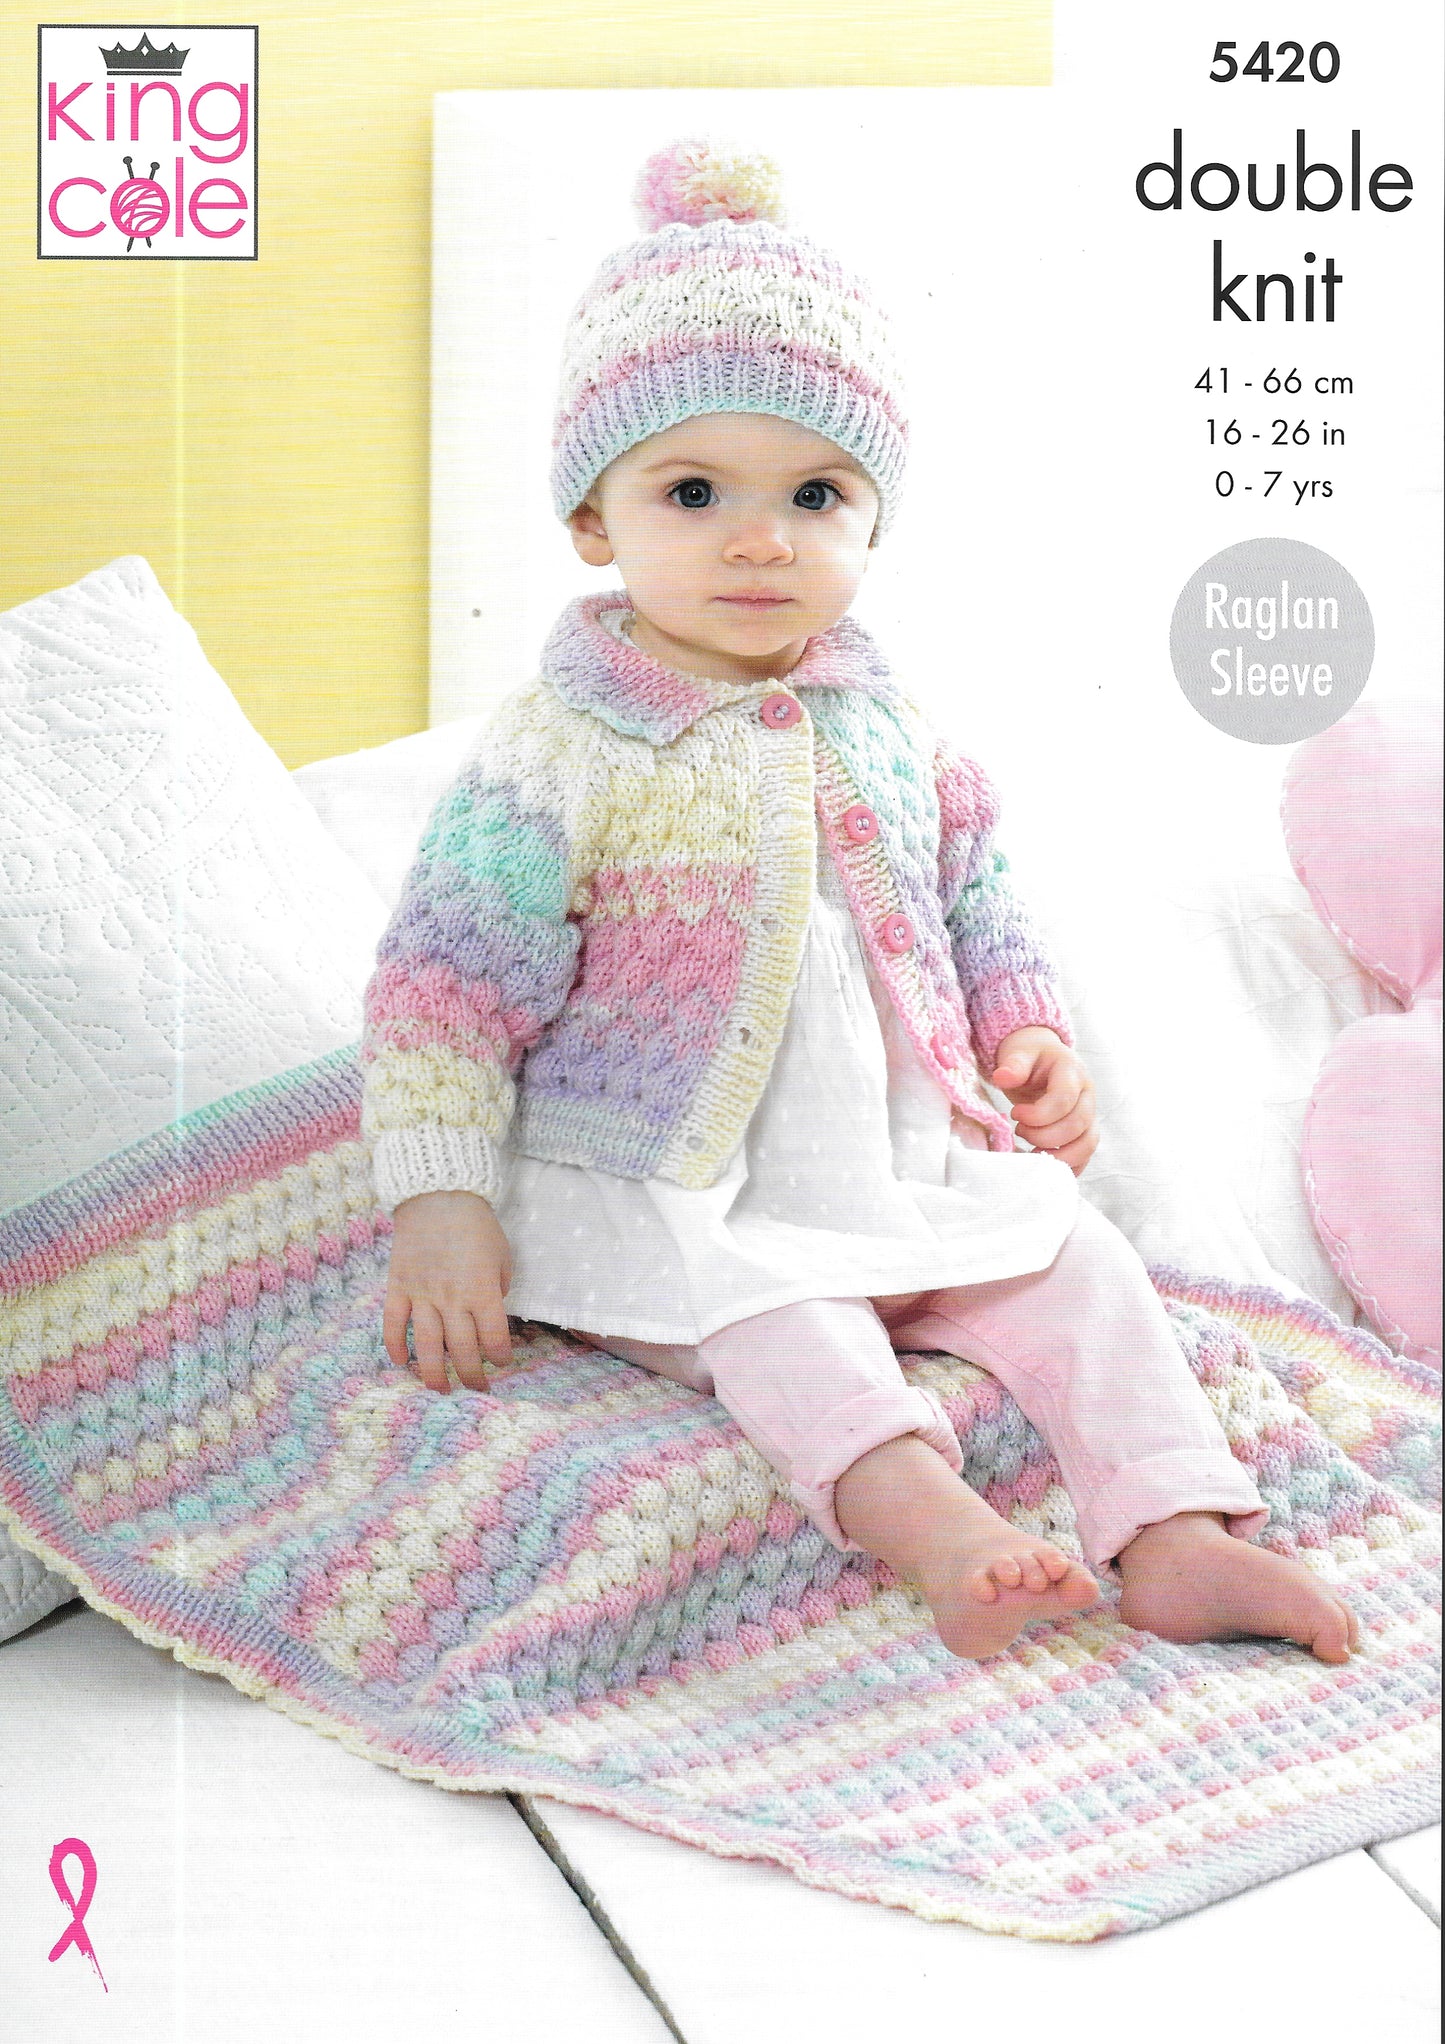 5420 King Cole double knit Cardigan/Hat/Blanket knitting pattern